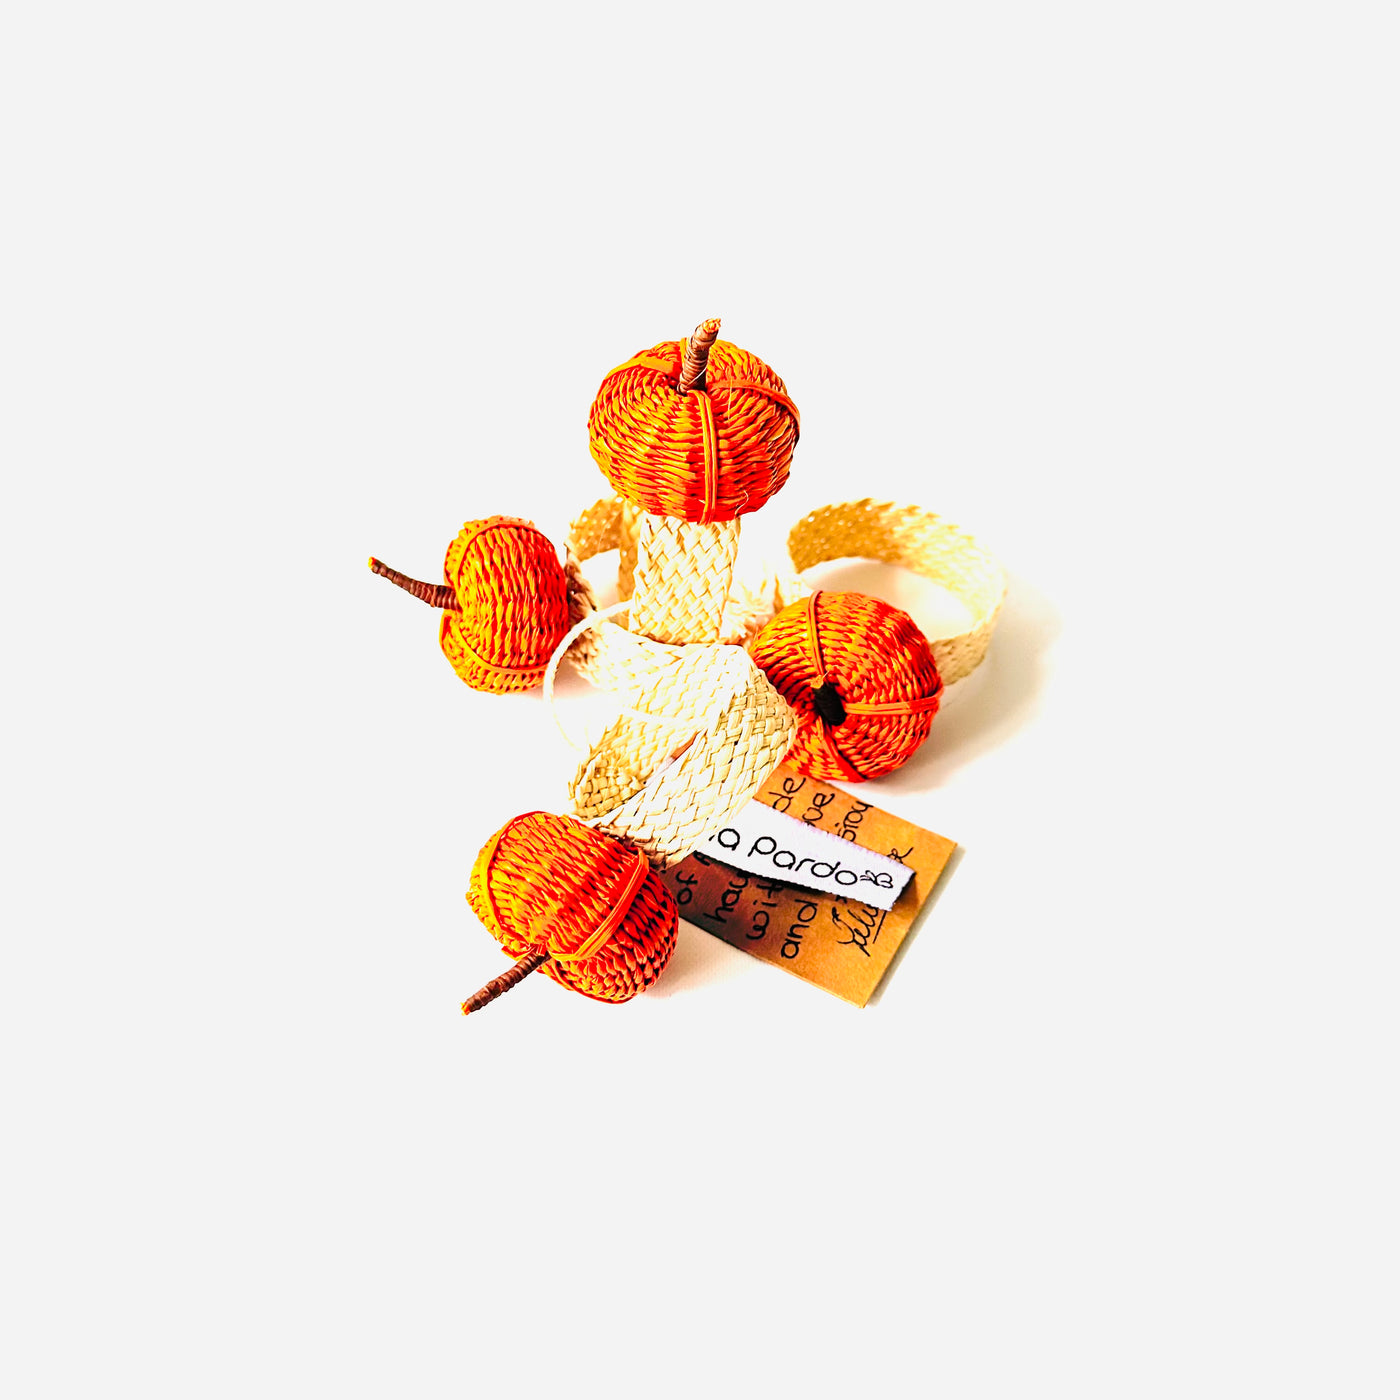 Pumpkin Napkin Rings